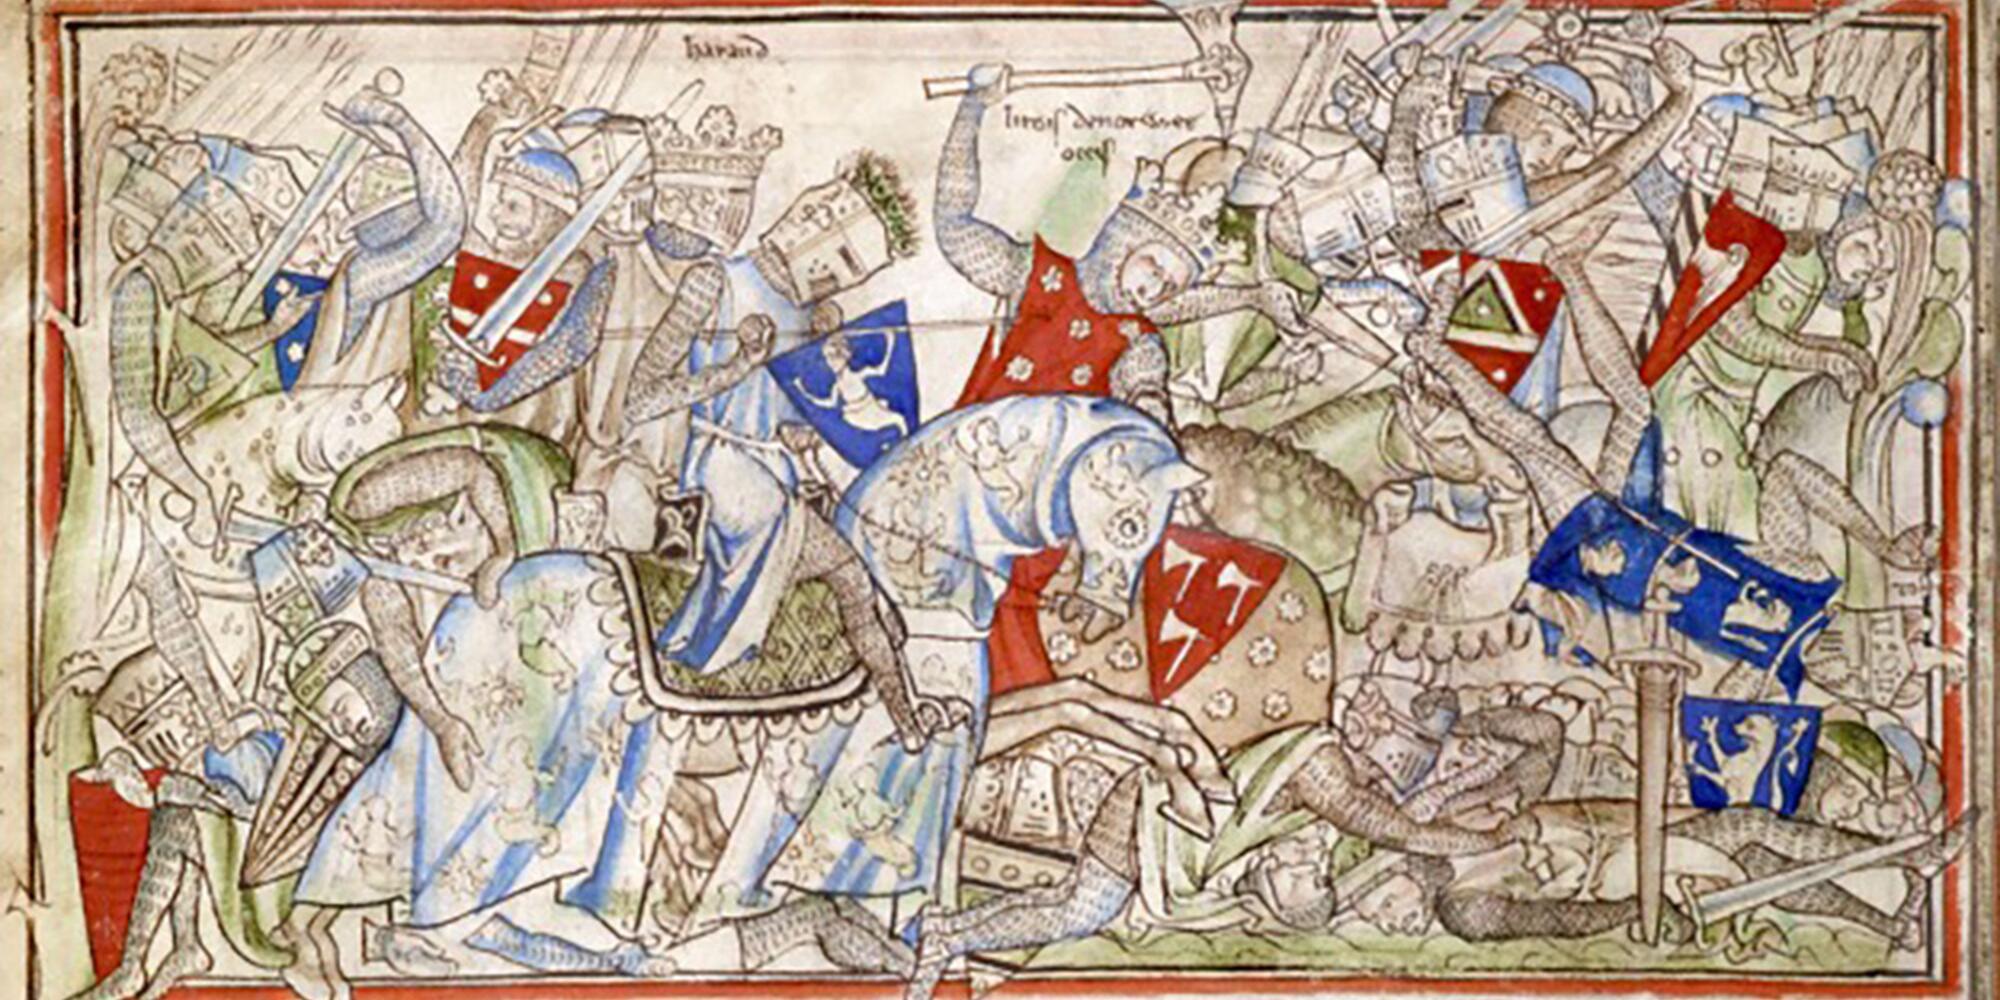 Manuscript image of battle